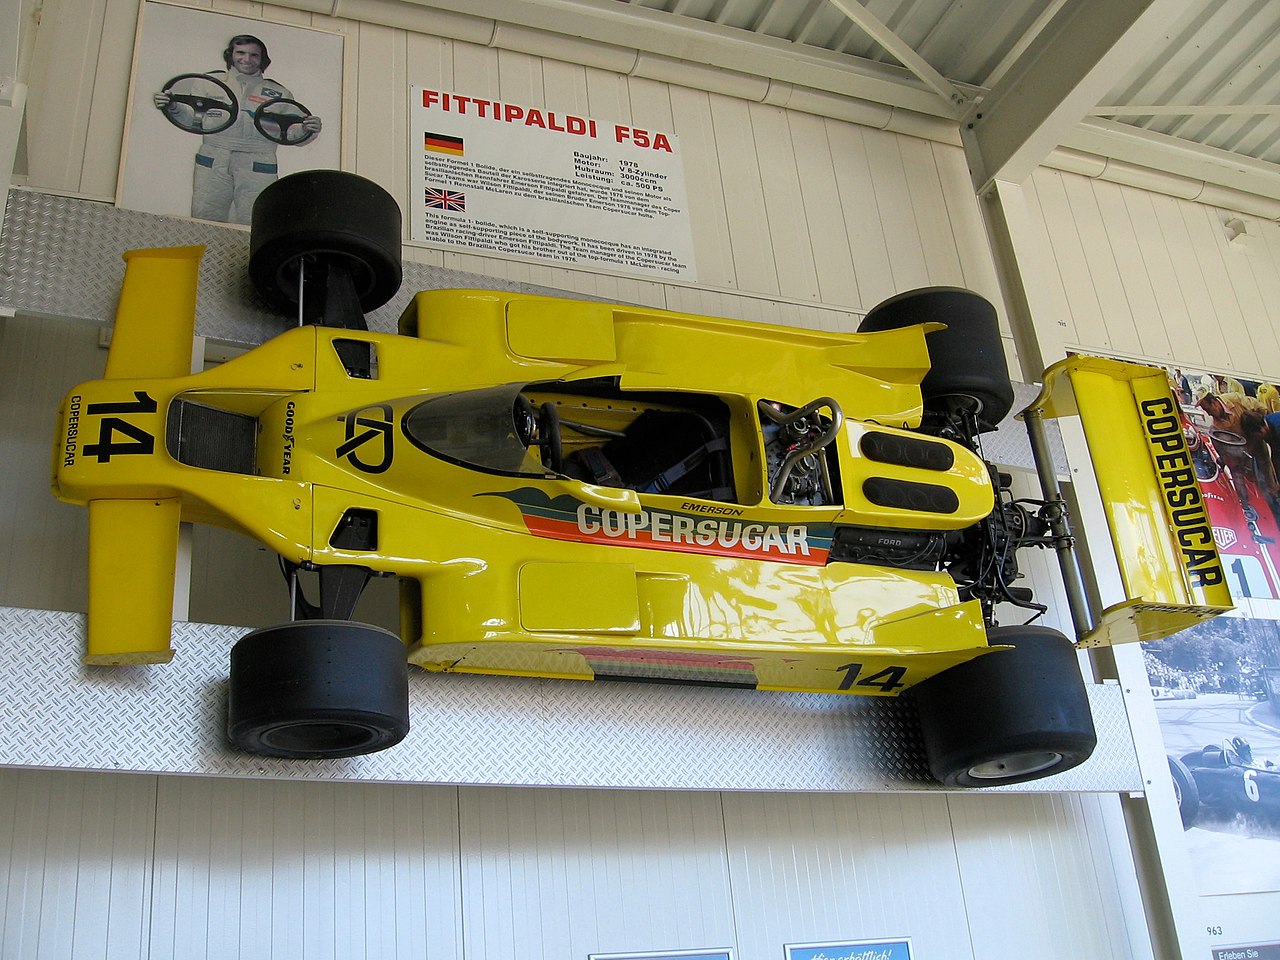 Fittipaldi_F5A_Auto_und_Technik_Museum_Sinsheim.jpg